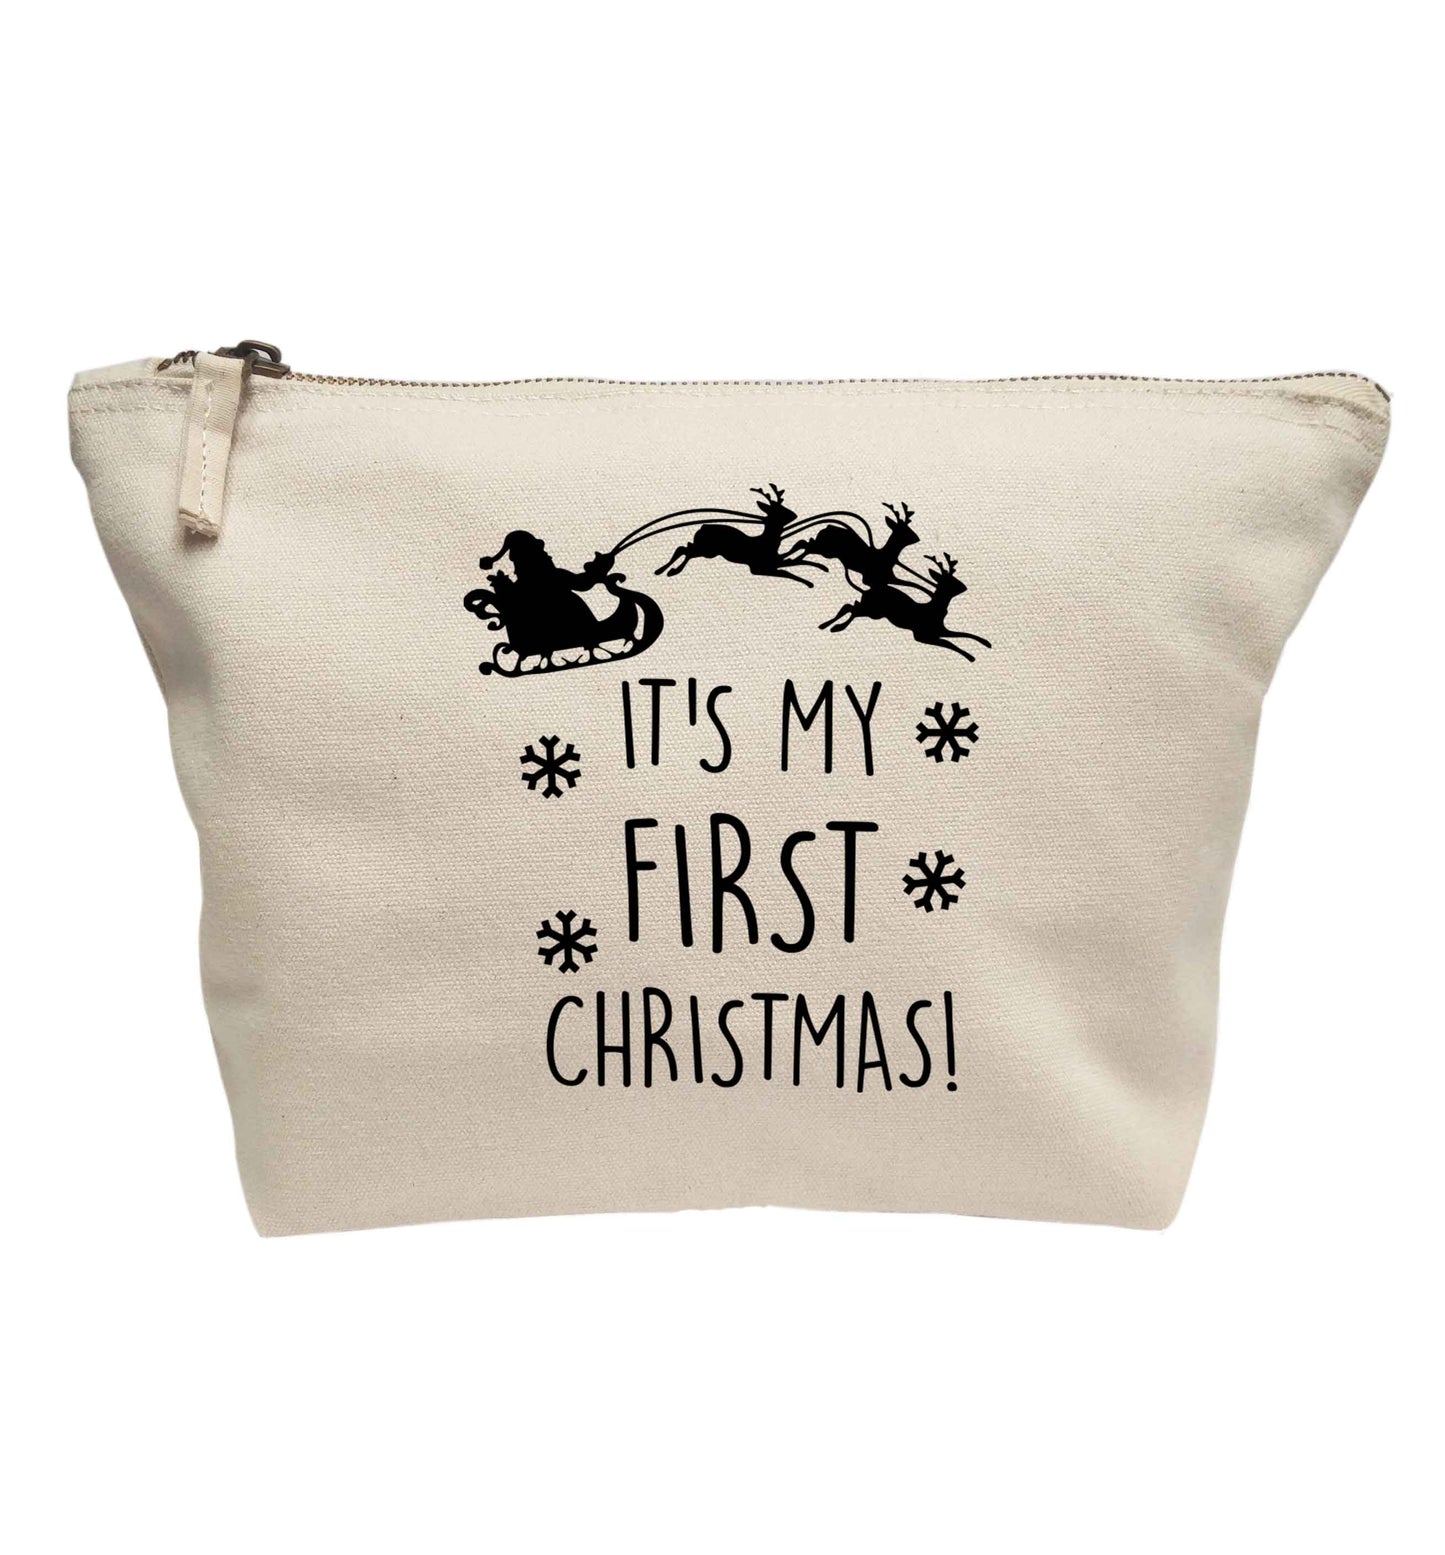 It's my first Christmas - Santa sleigh text | Makeup / wash bag